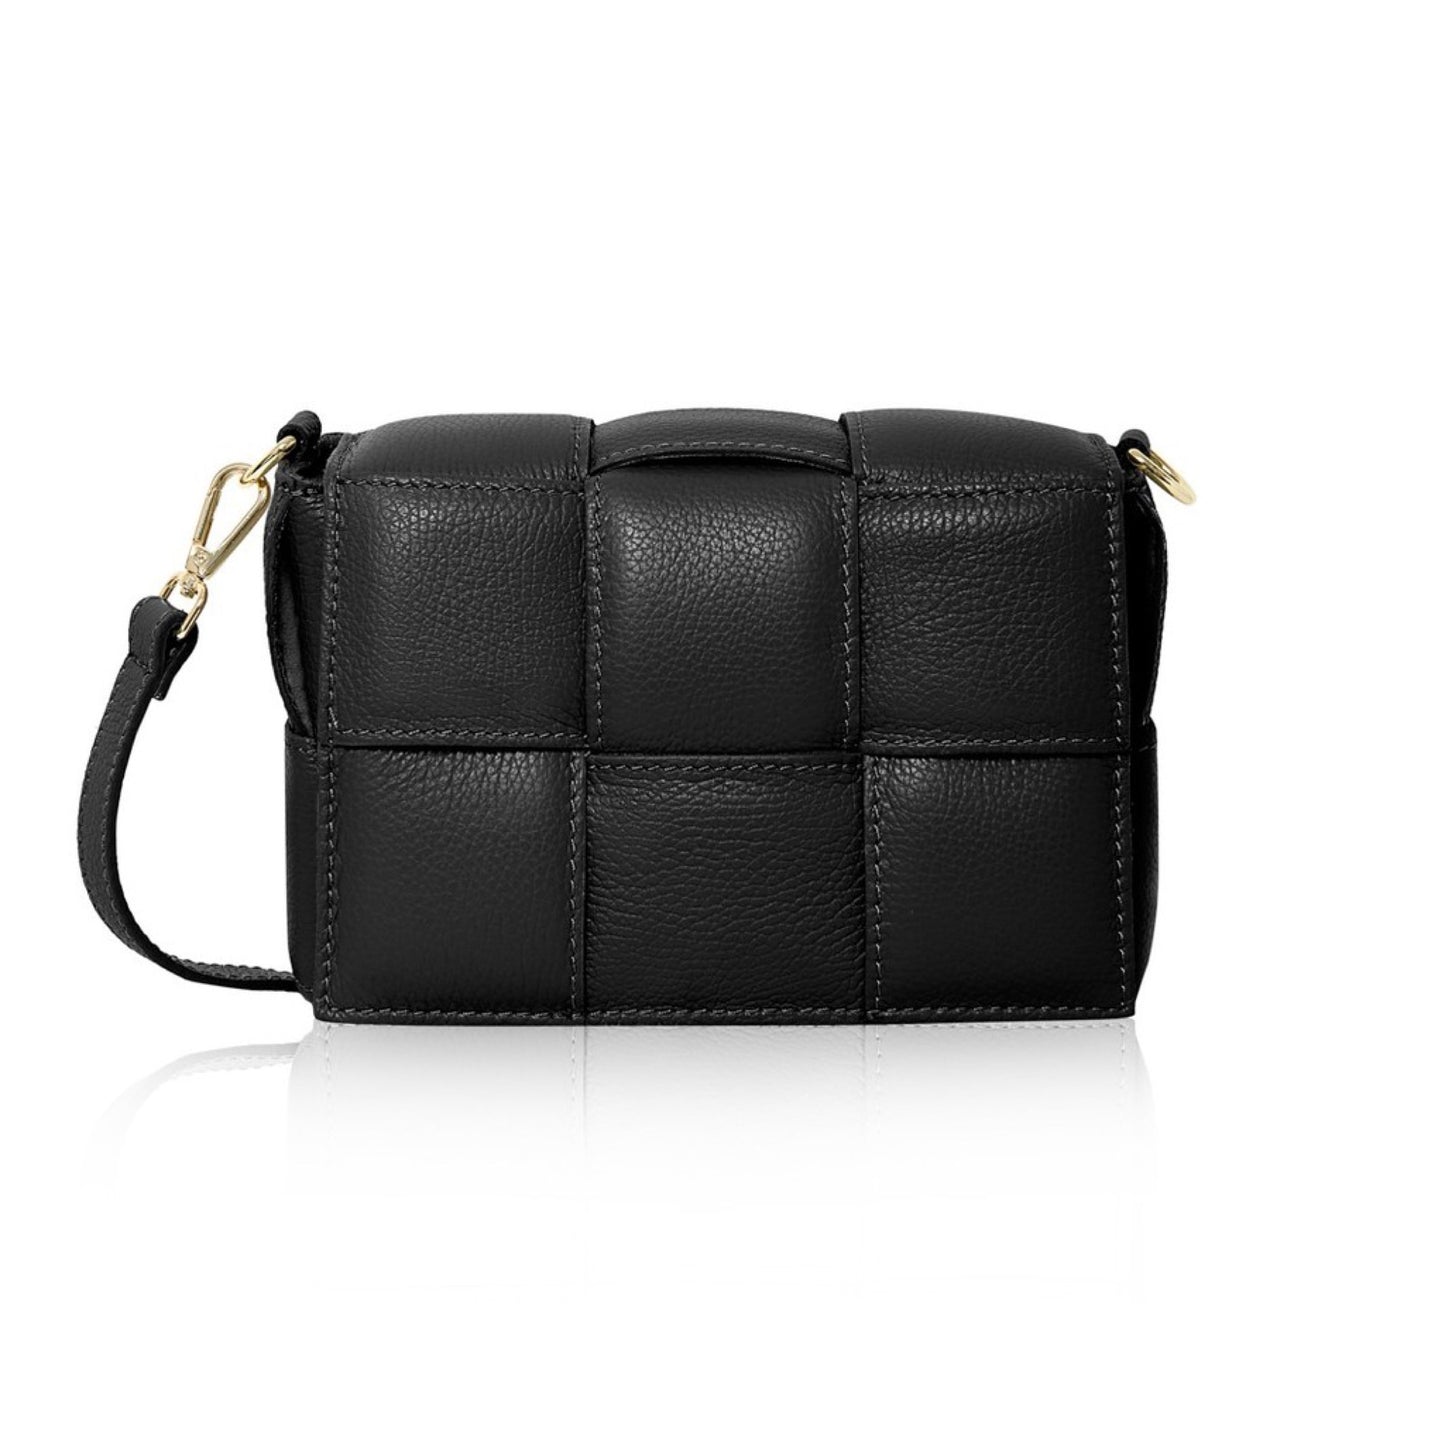 Anna - Woven leather box bag